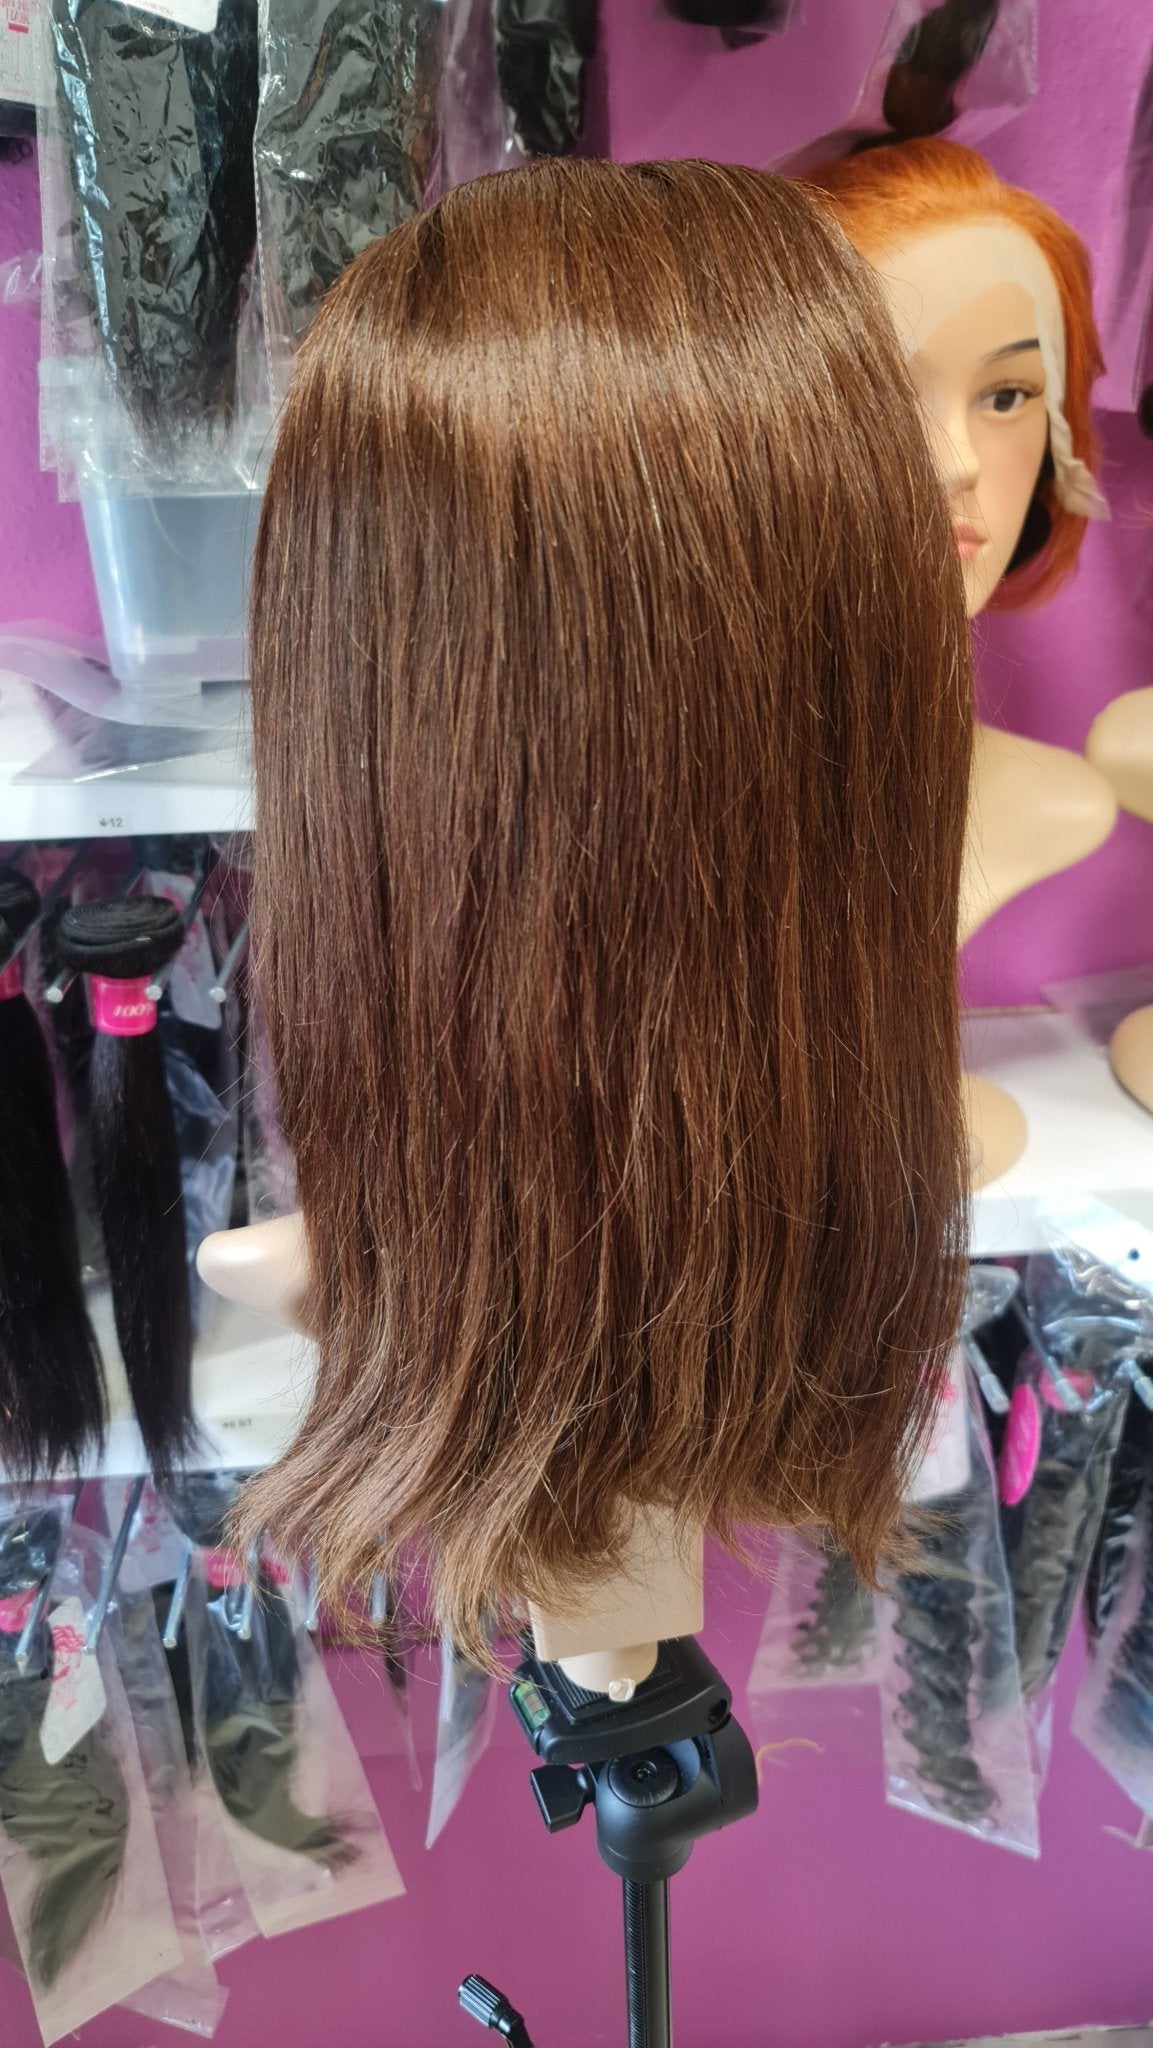 Perücke 10" 12" 14" 16" glatt mit Lace Frontal 13x4 Farbe 4Diosa Extensions Haarverlängerungen